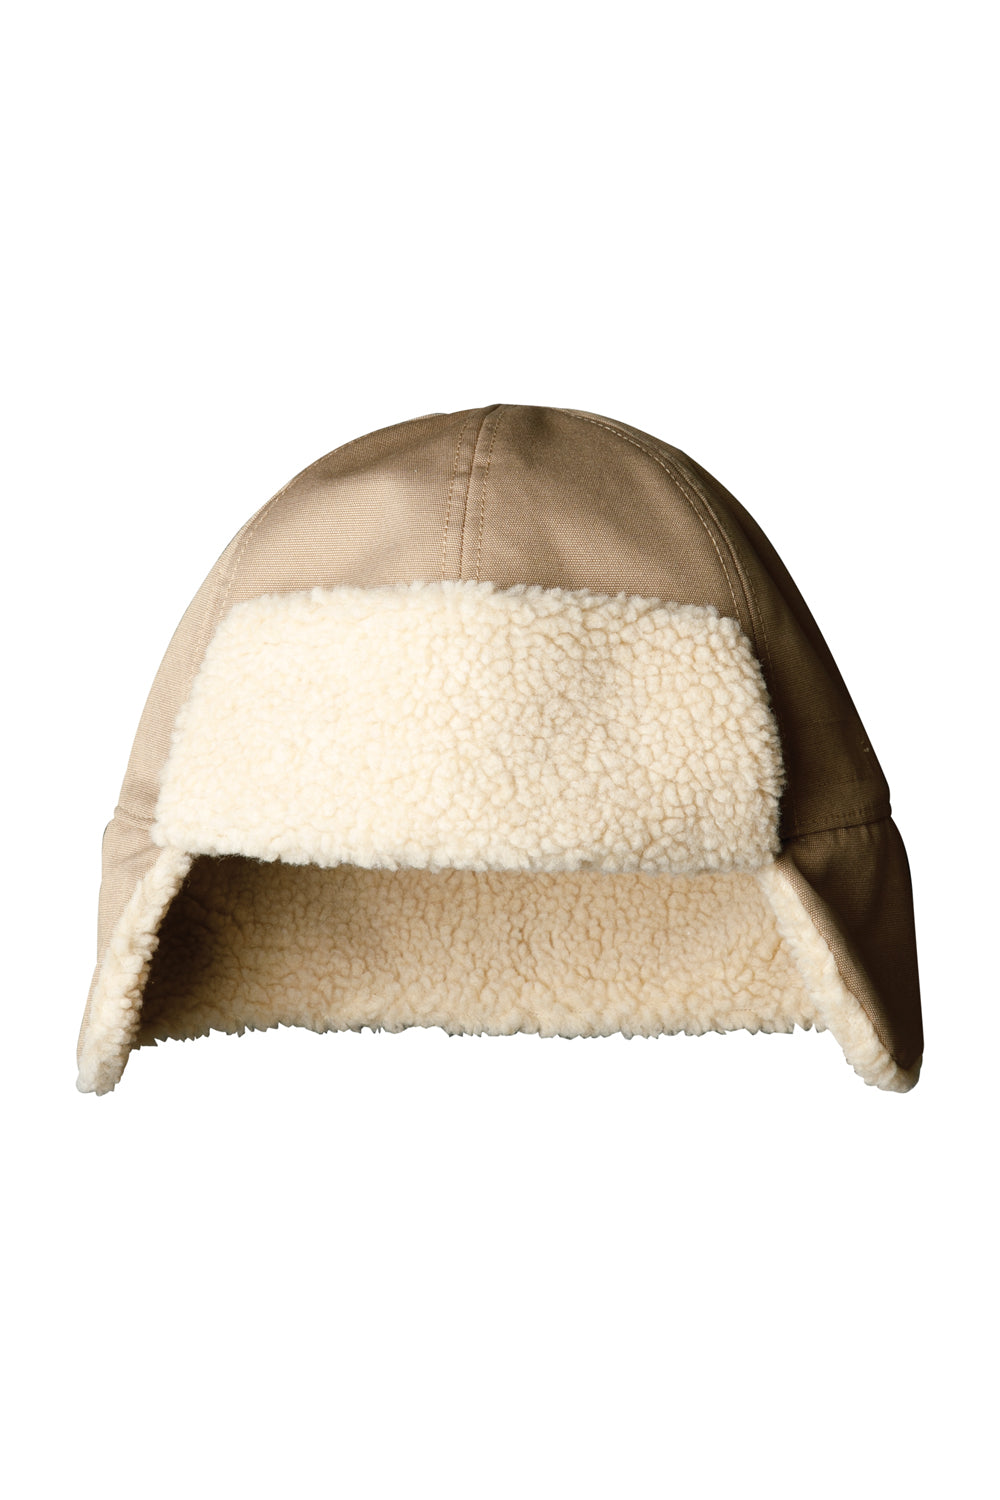 KAVU Fur Ball Camp Hat - Accessories